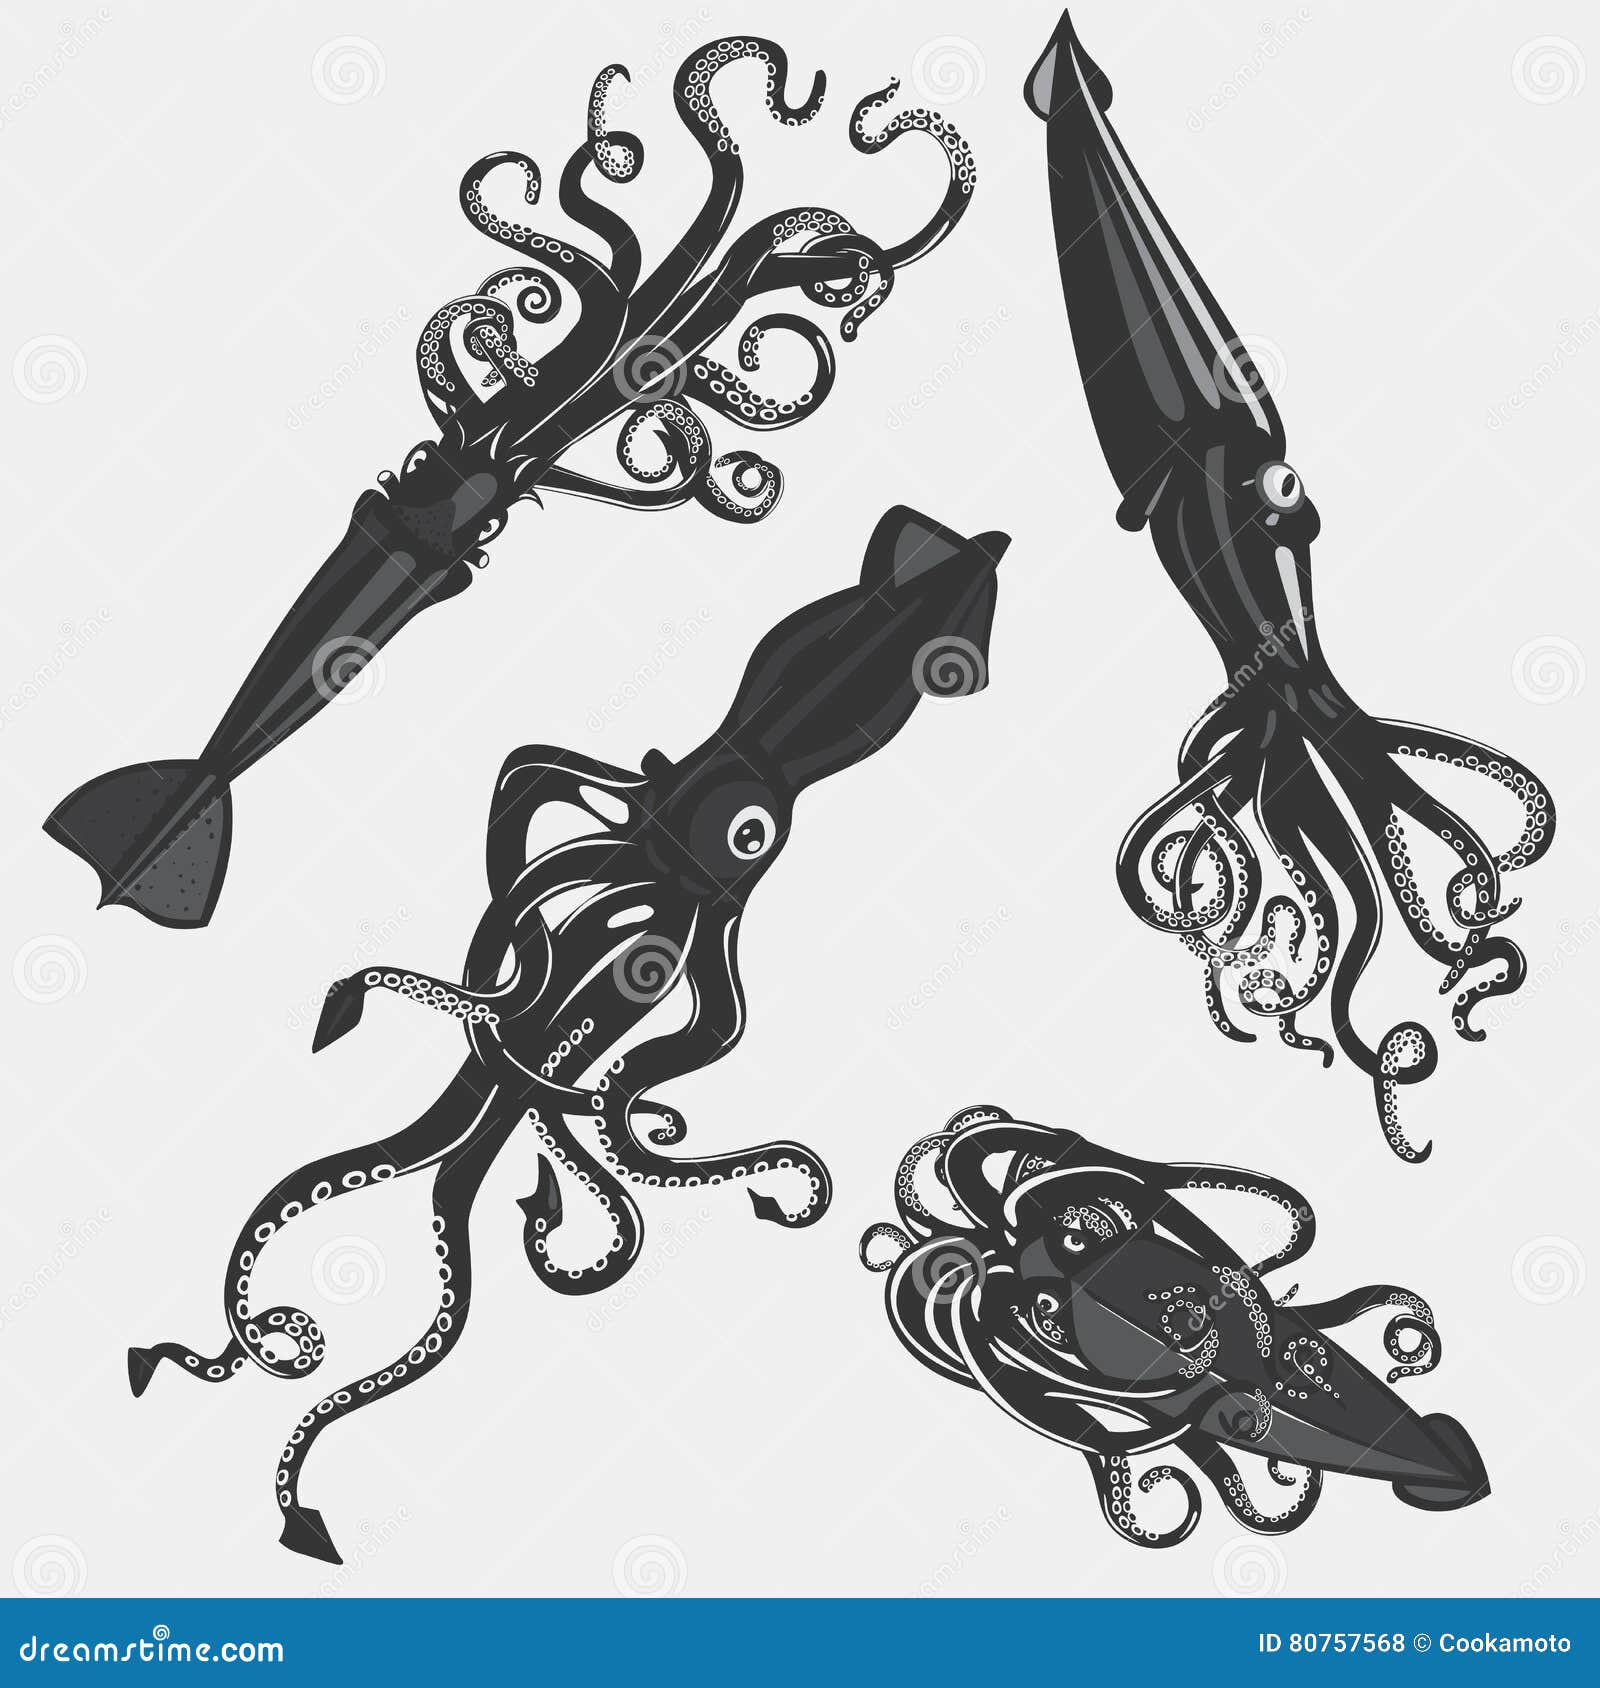 29 Best Squid Tattoo Designs